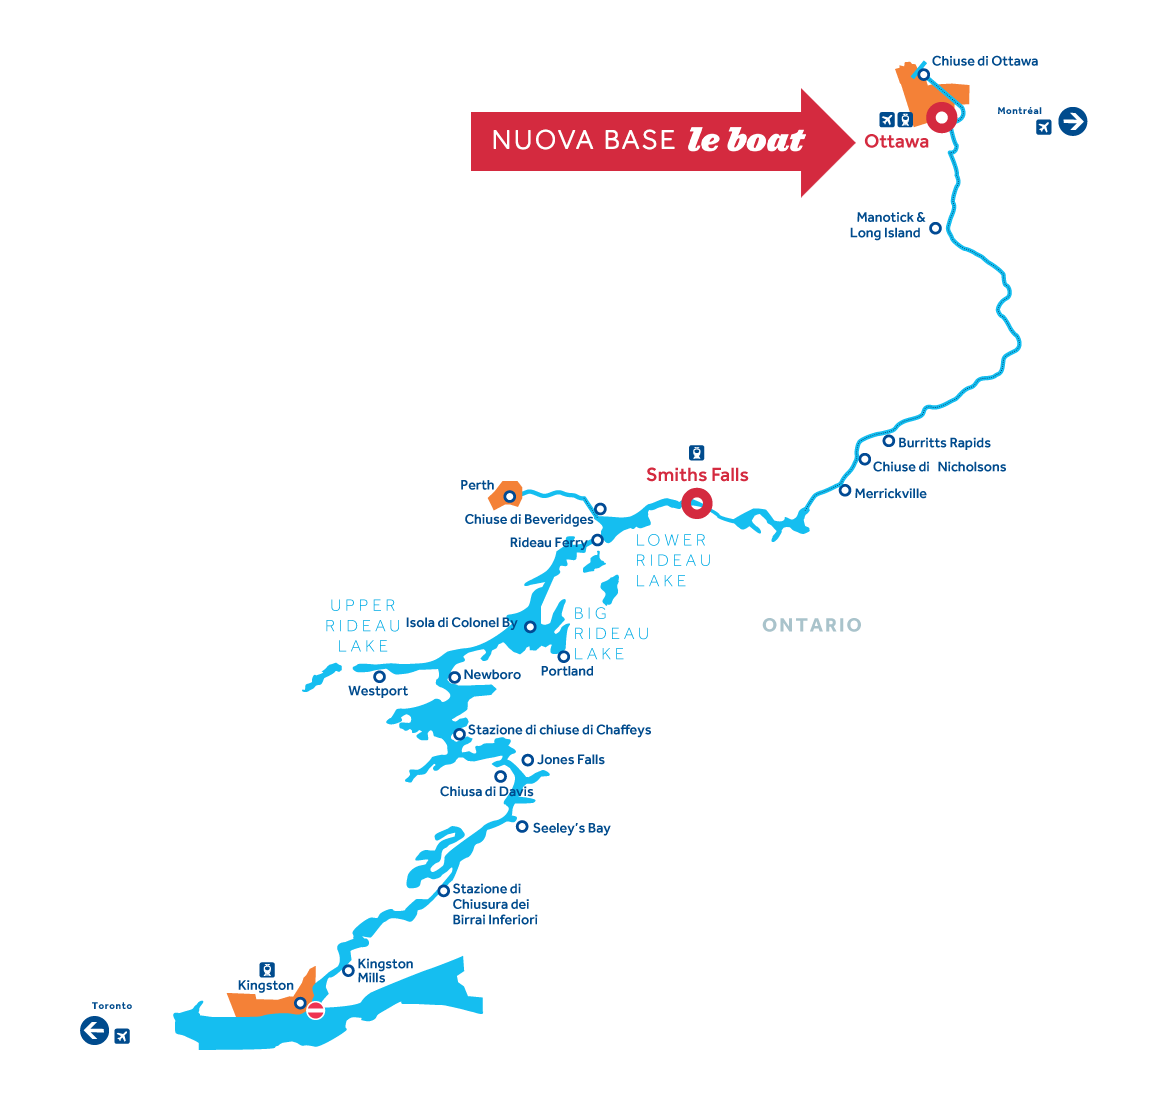 Mappa: Canale Rideau